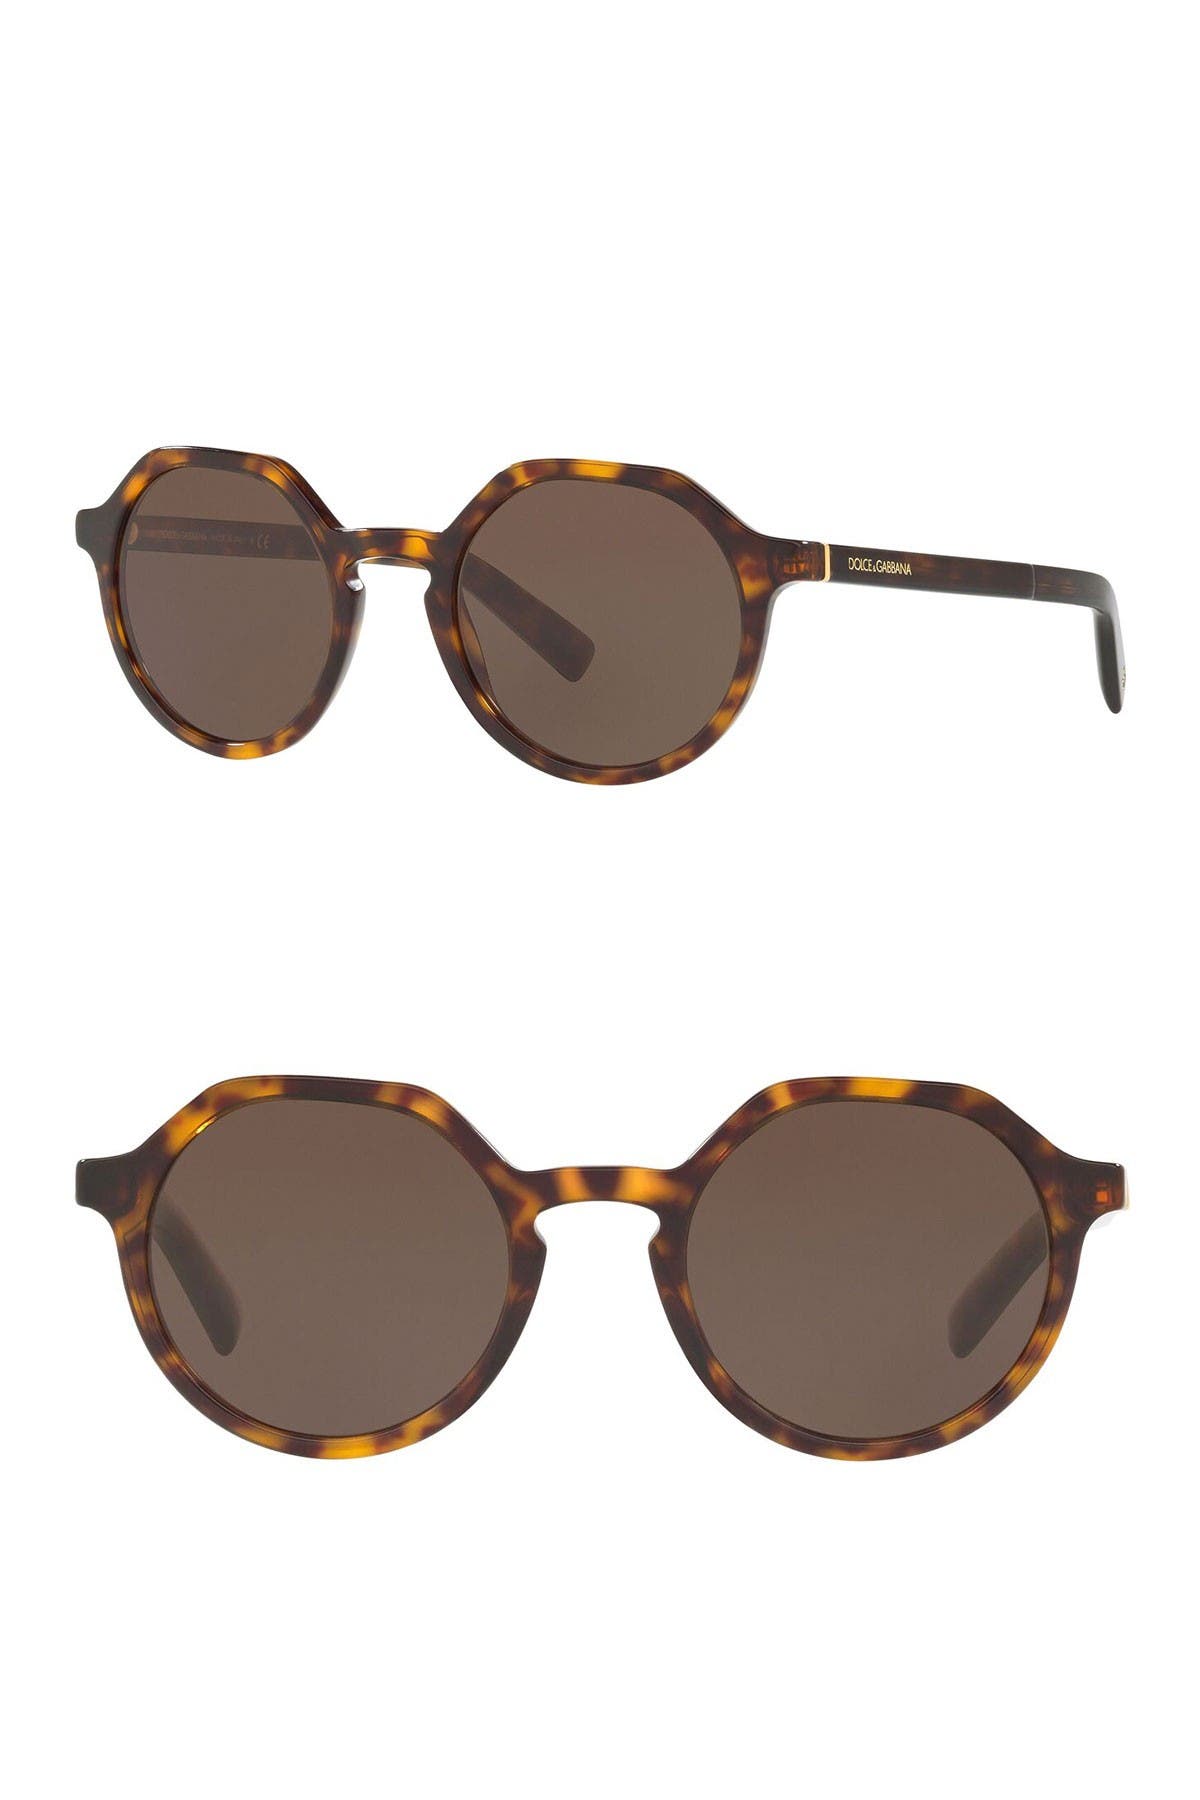 dolce and gabbana phantos sunglasses